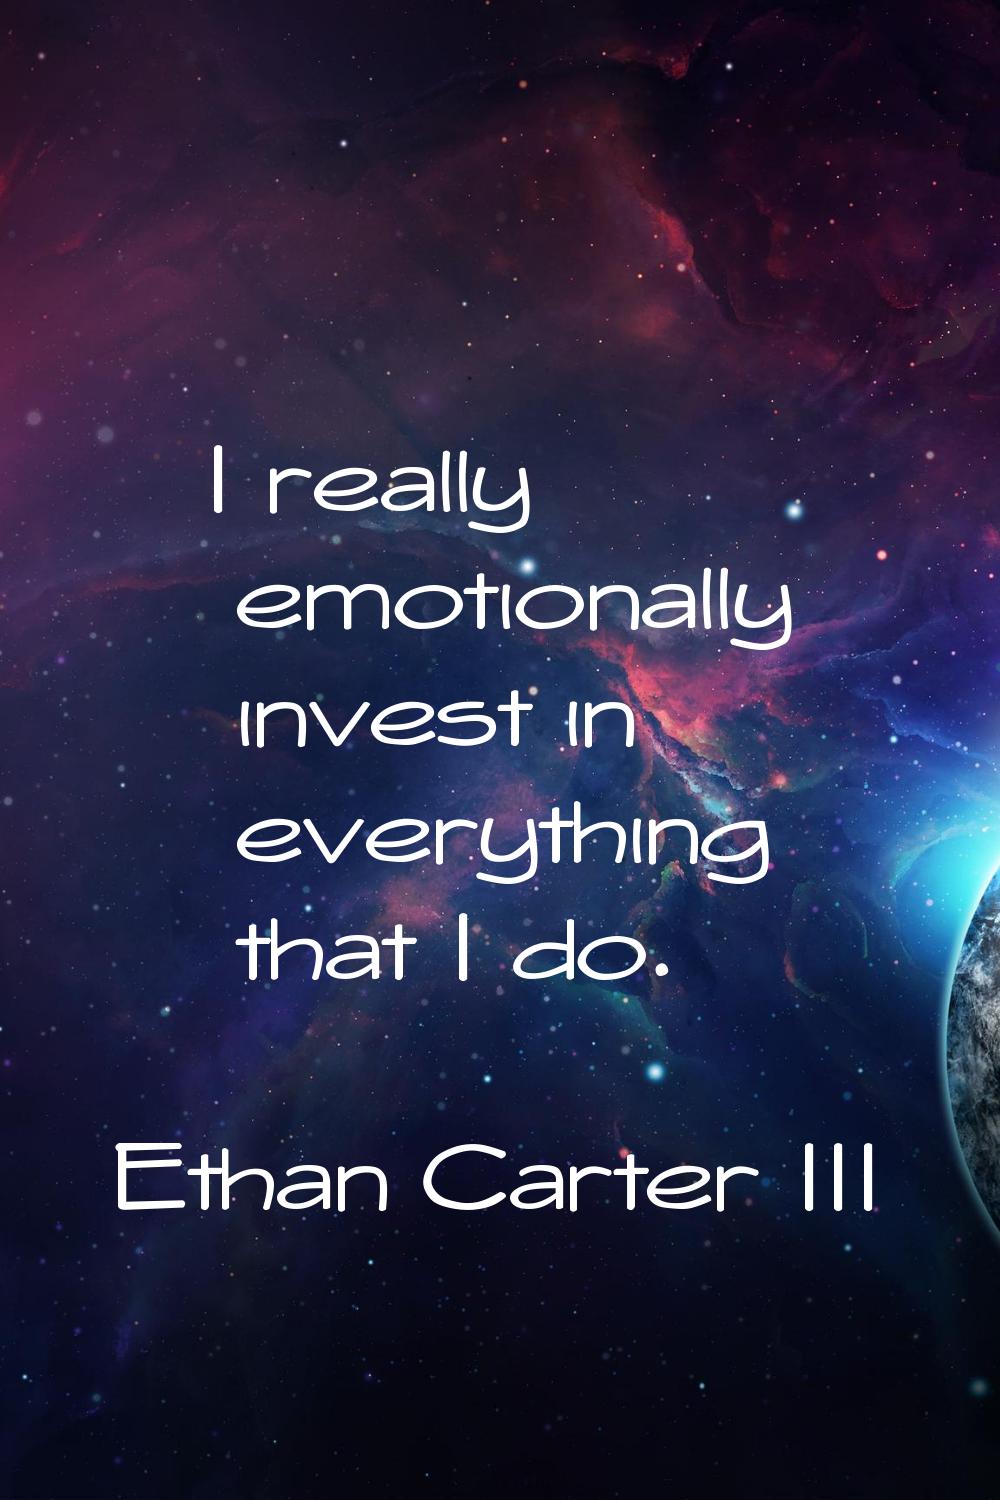 I really emotionally invest in everything that I do.